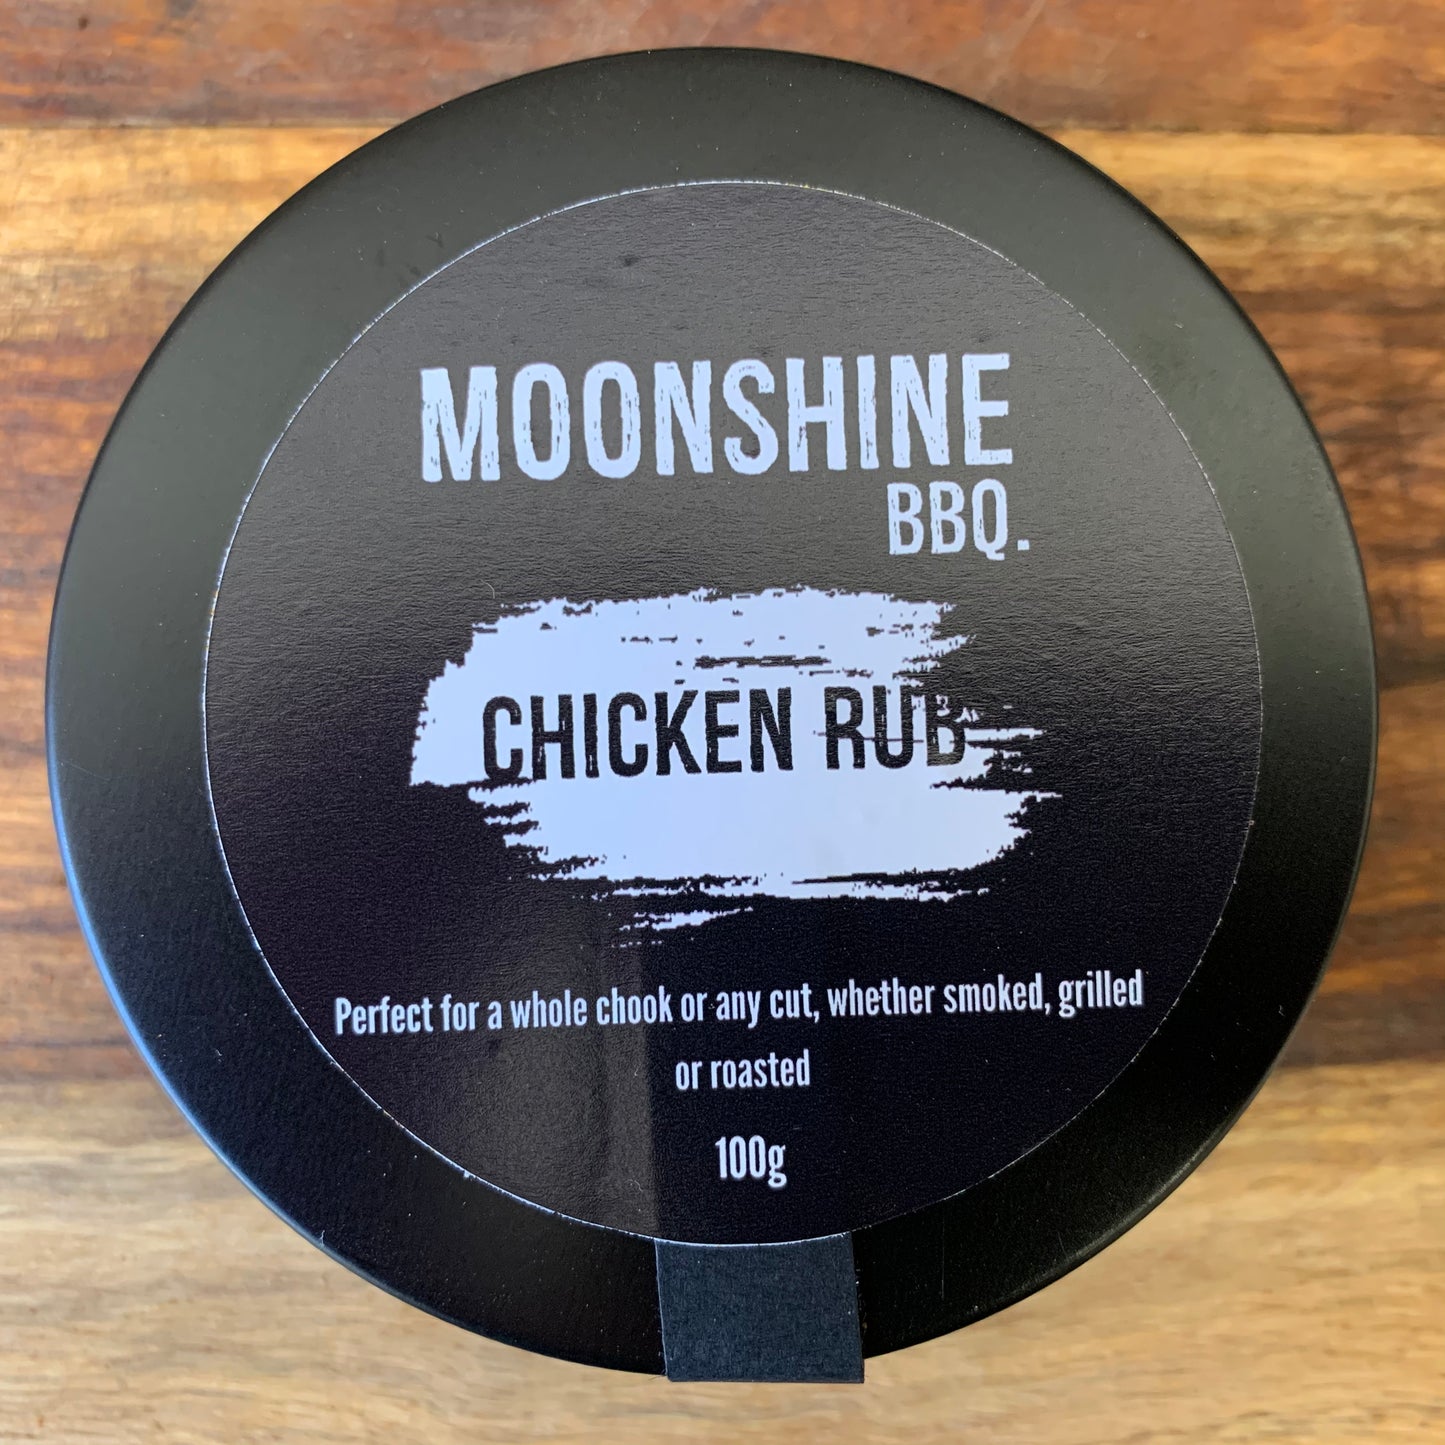 MOONSHINE BBQ: Chicken Rub - 100g